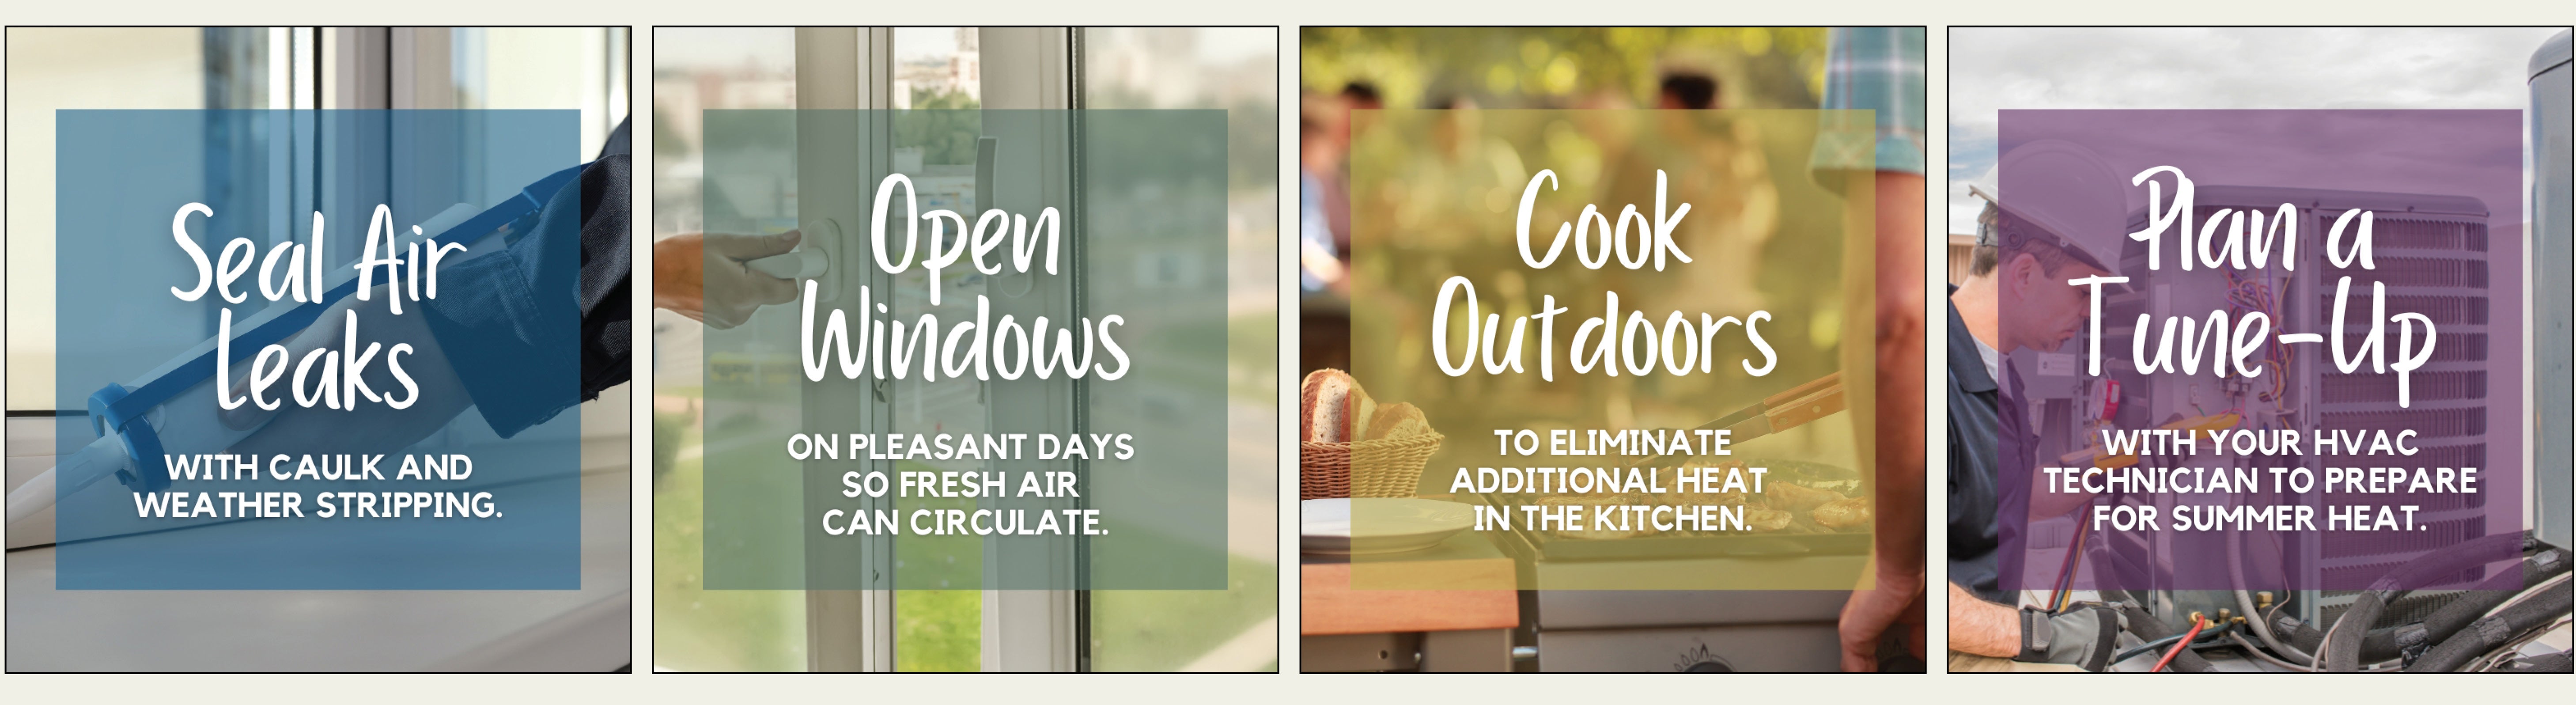 Spring efficincy tips: seal air leaks, open windows, cook outdoors, plan HVAC tune-up